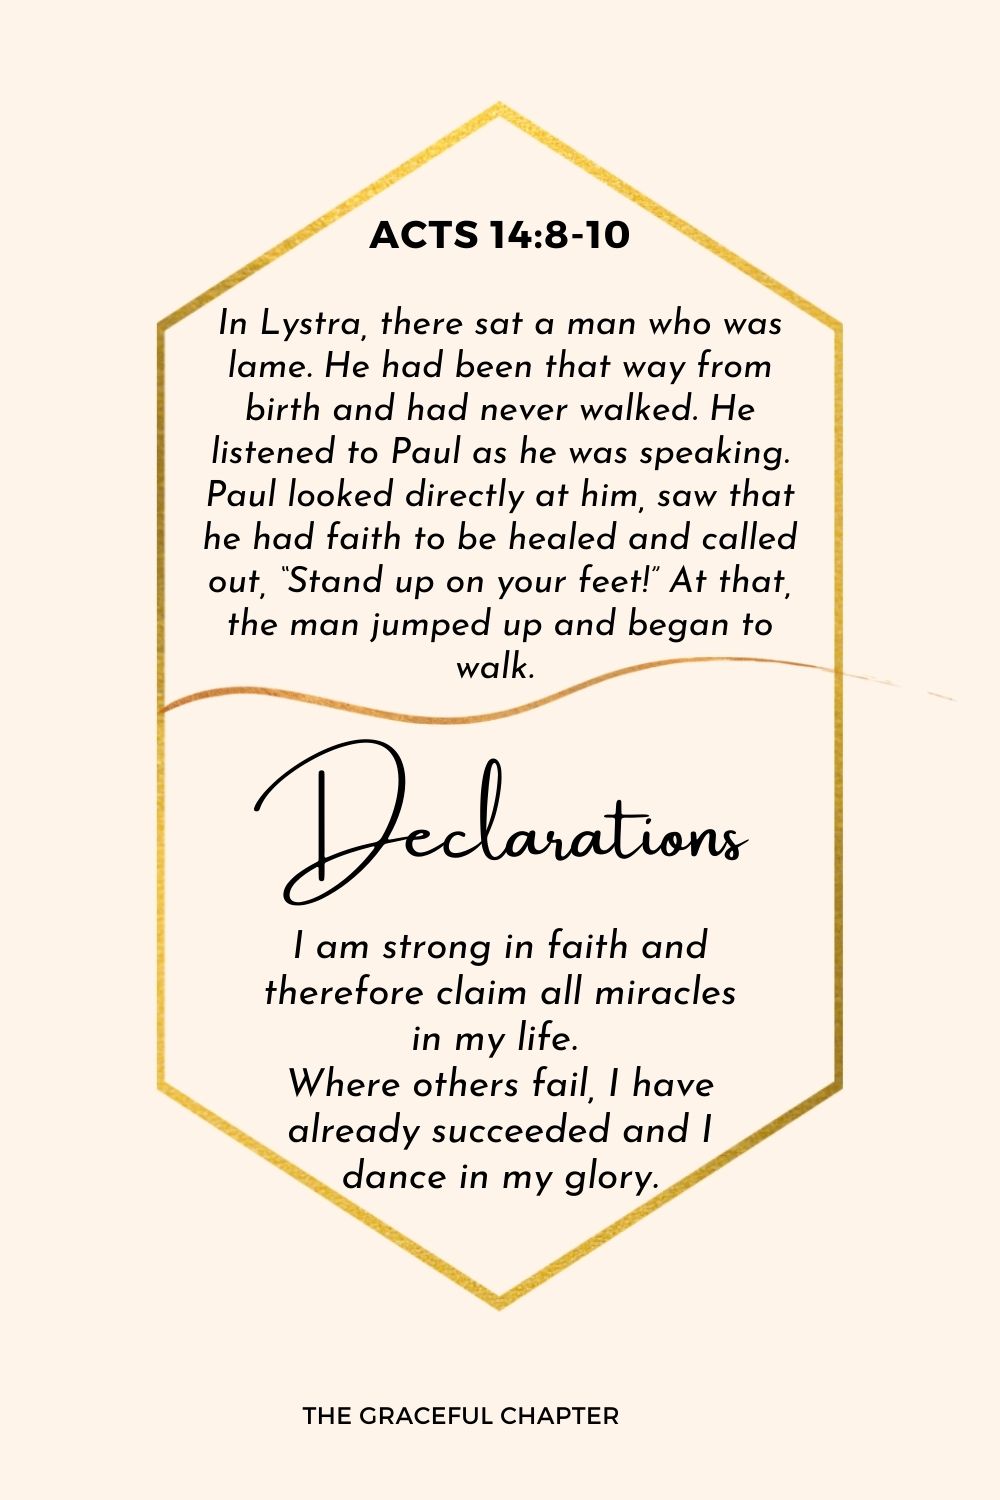 Declaration-Acts 14:8-10